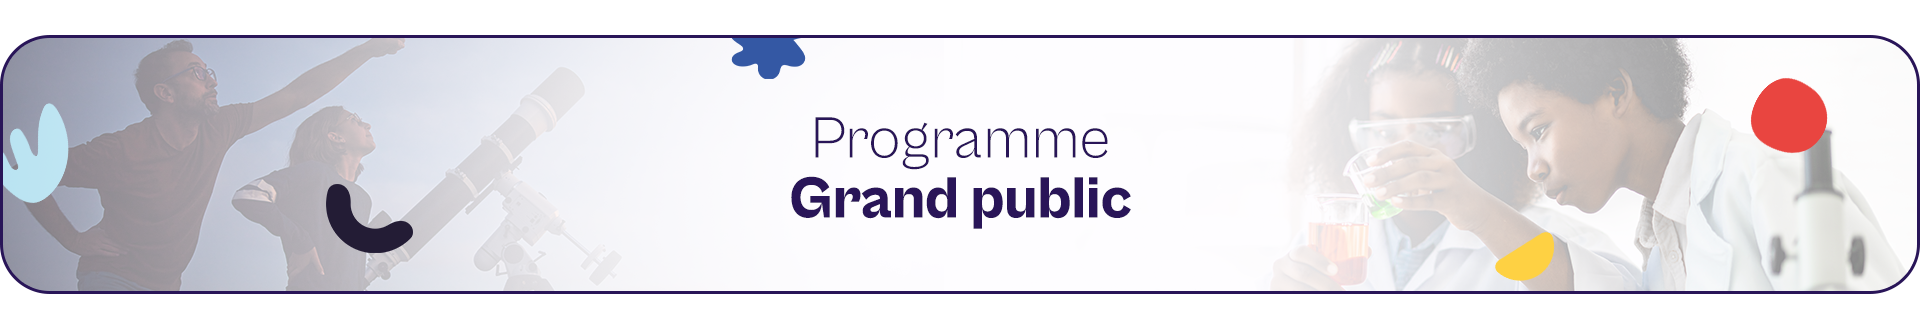 Programme grand public